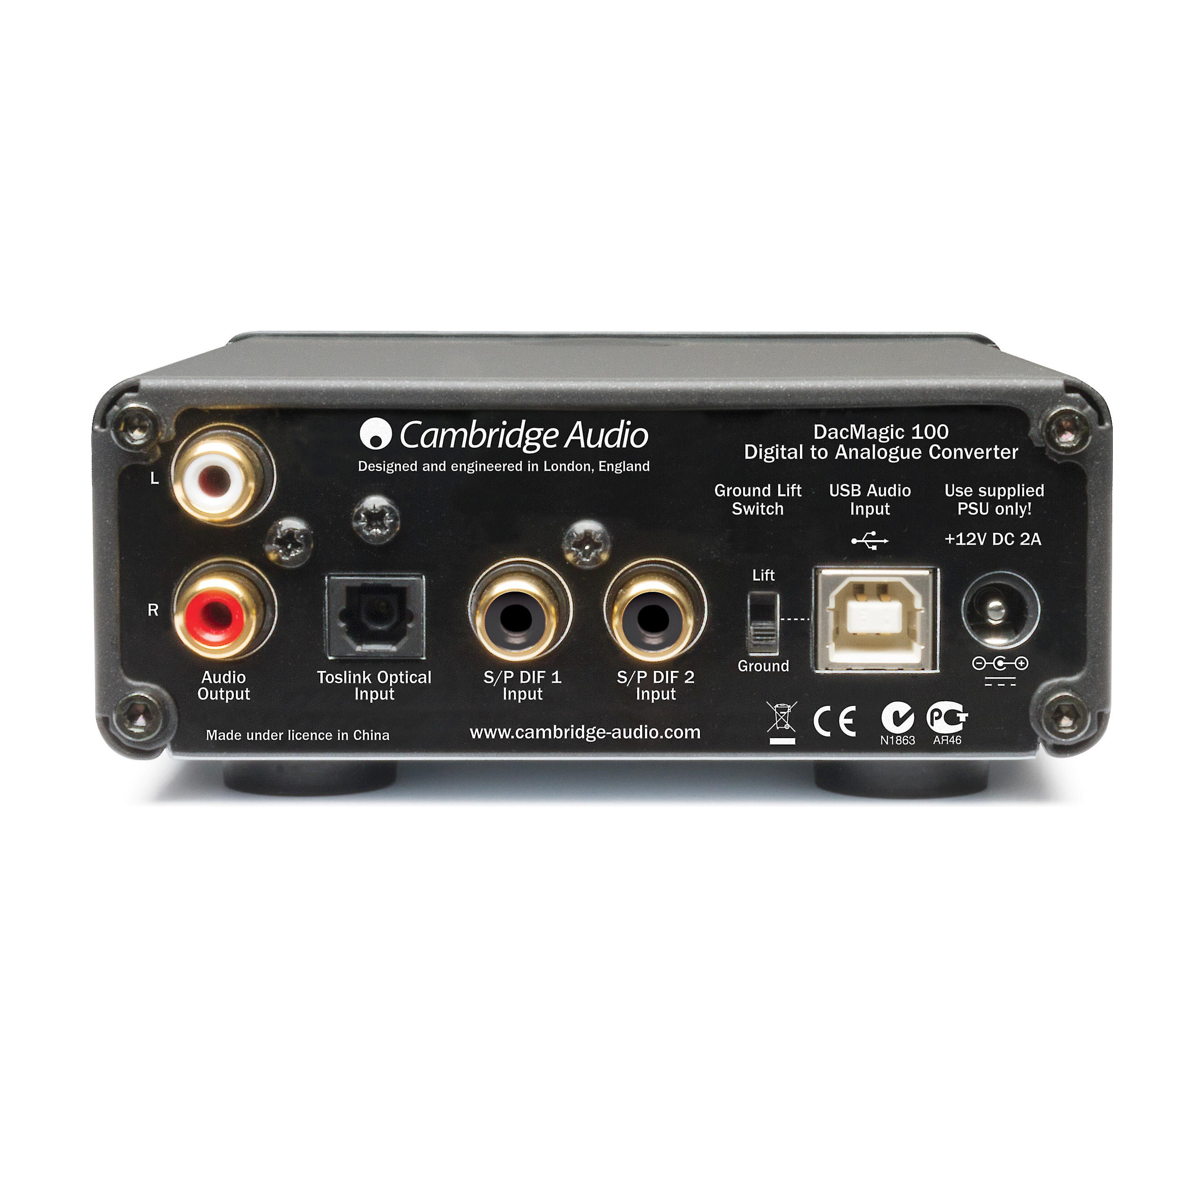 Cambridge Audio DACMagic 100 - Digital to Analogue Converter - AVStore